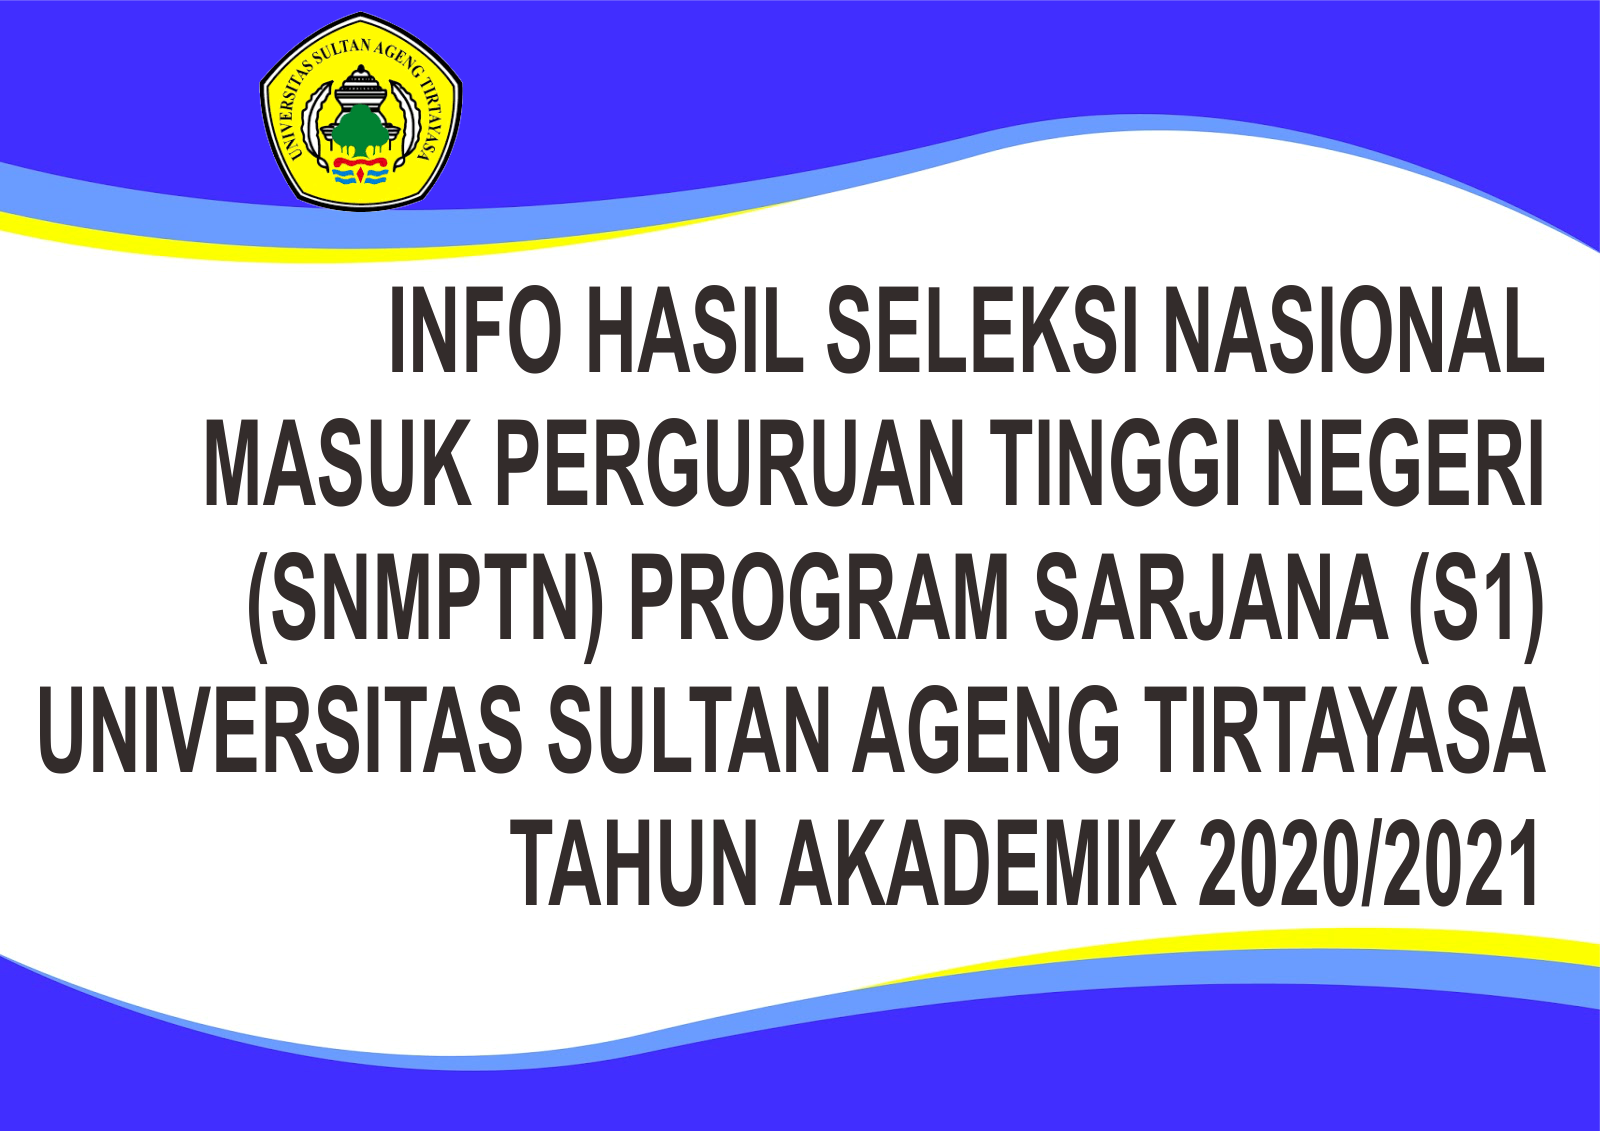 Pengumuman SNMPTN 2020/2021 Program Sarjana (S1) Universitas Sultan Ageng Tirtayasa